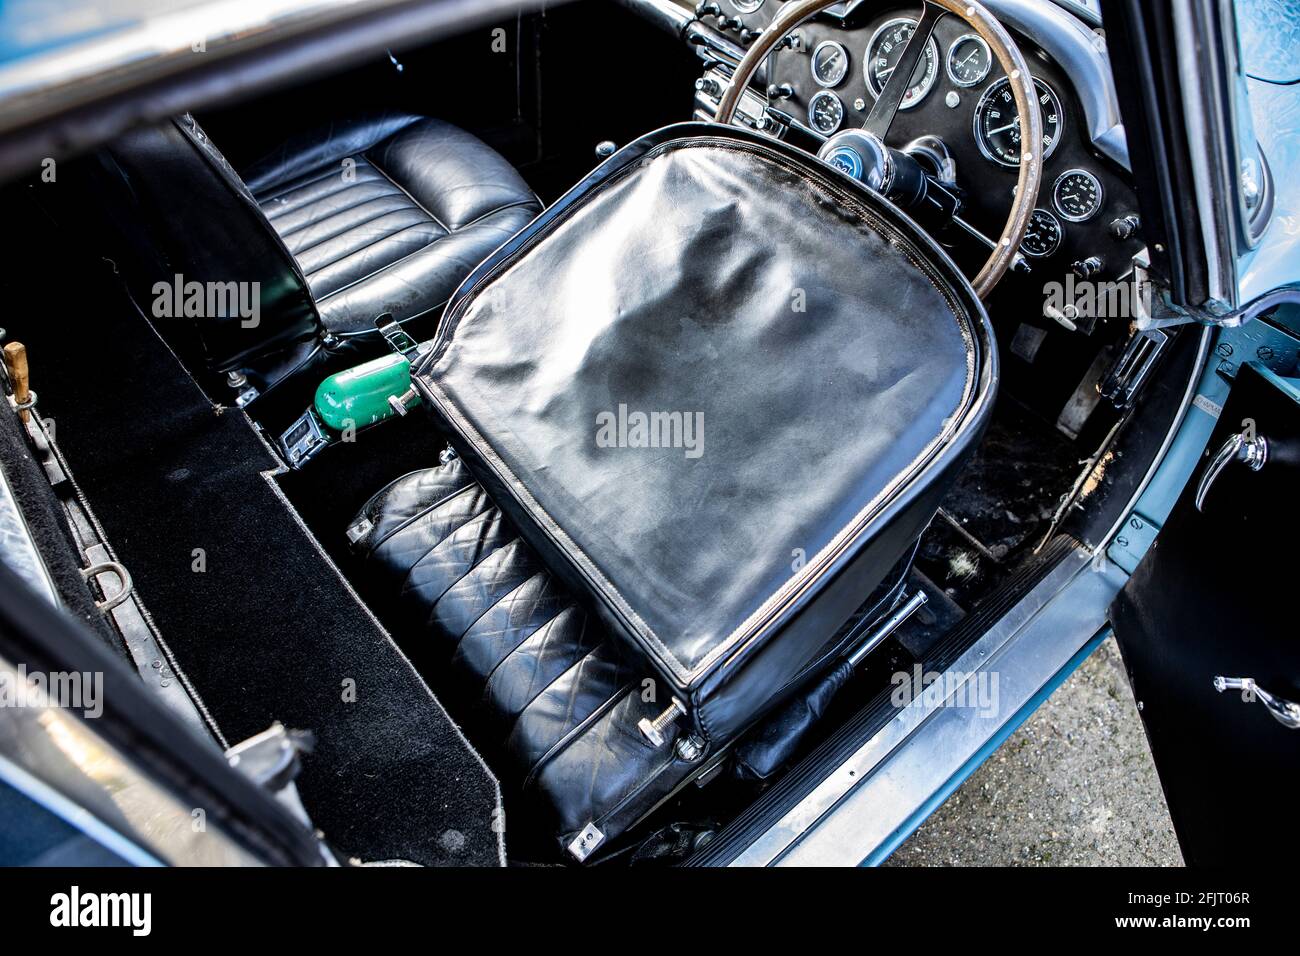 1961 Aston Martin DB4 GT SWB lightweight interior showing seat folded forward Stock Photo